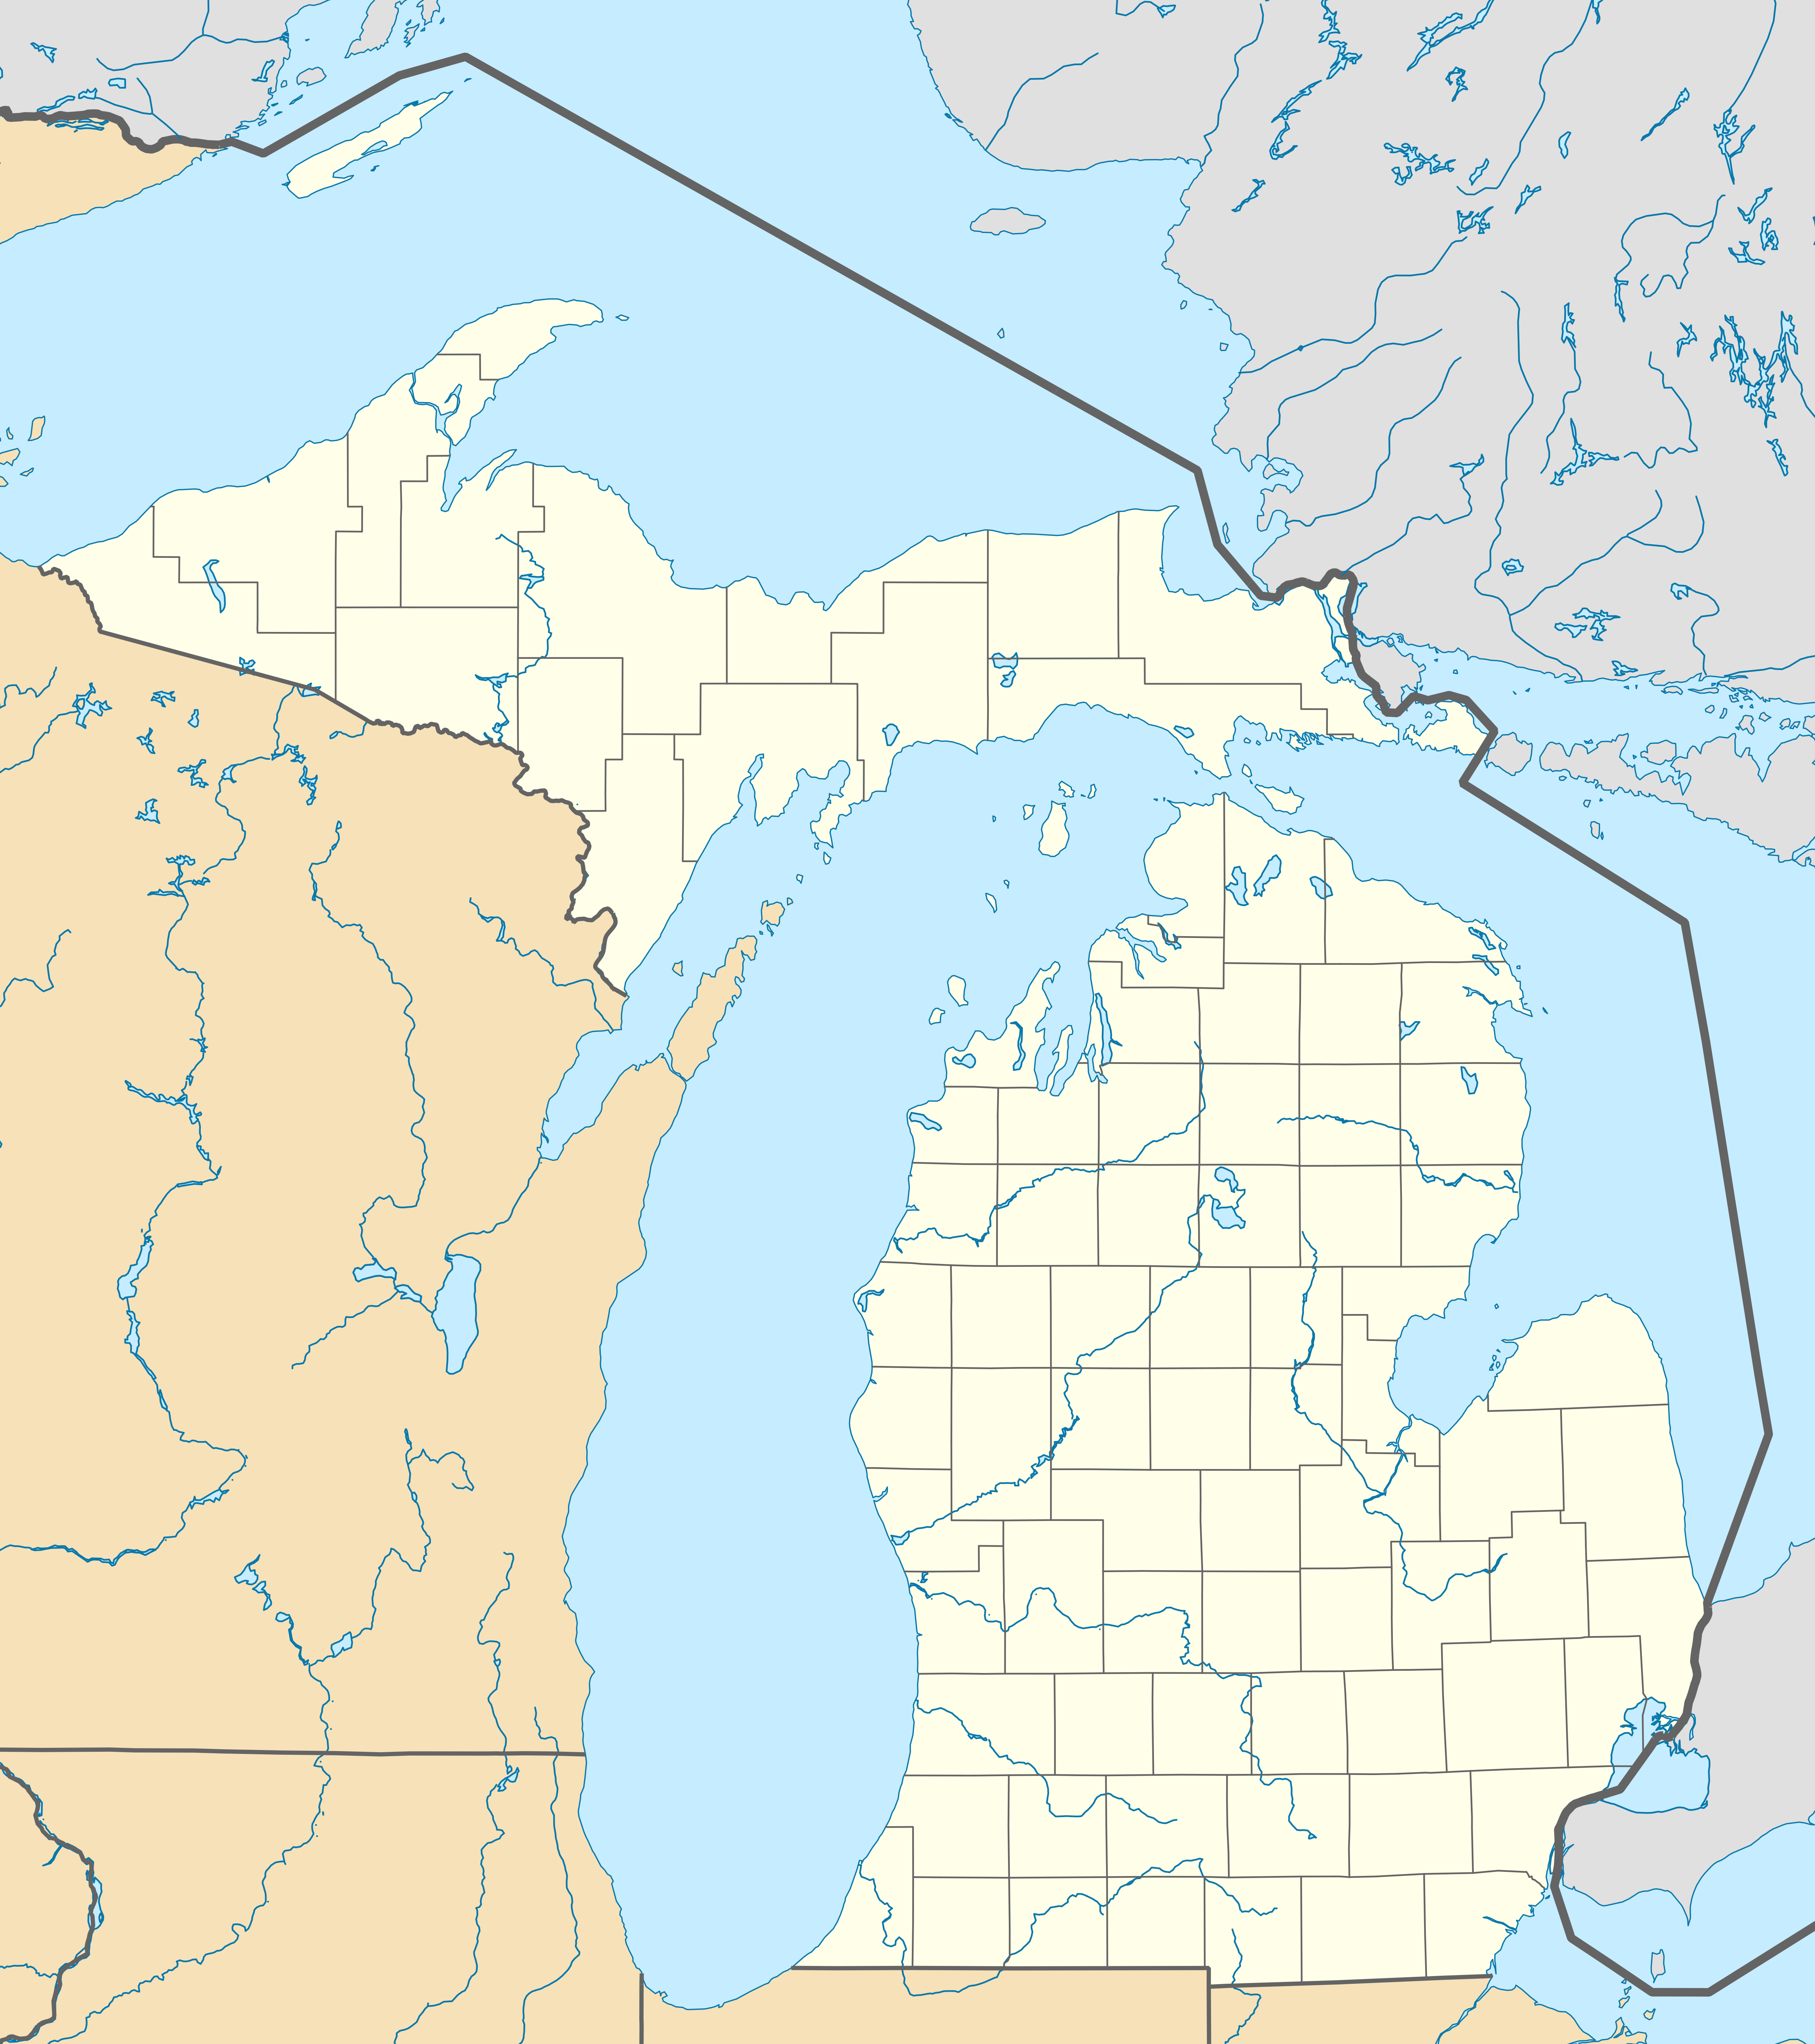 JPxG/sandbox07 is located in Michigan